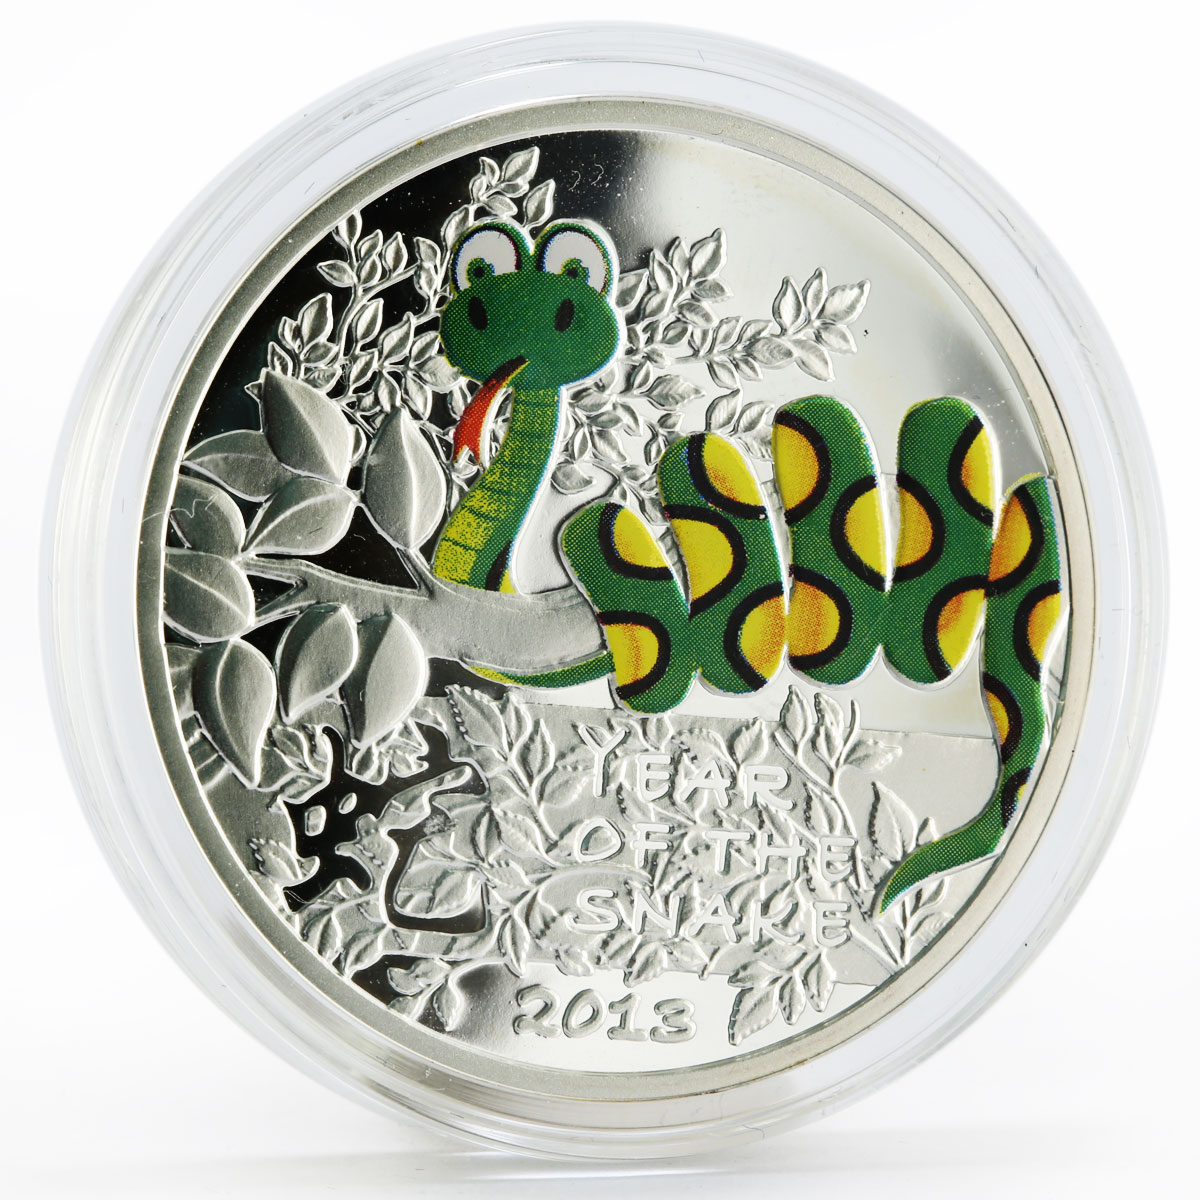 Niue 1 dollar Lunar Calendar series Year of the Snake colored silver coin 2012